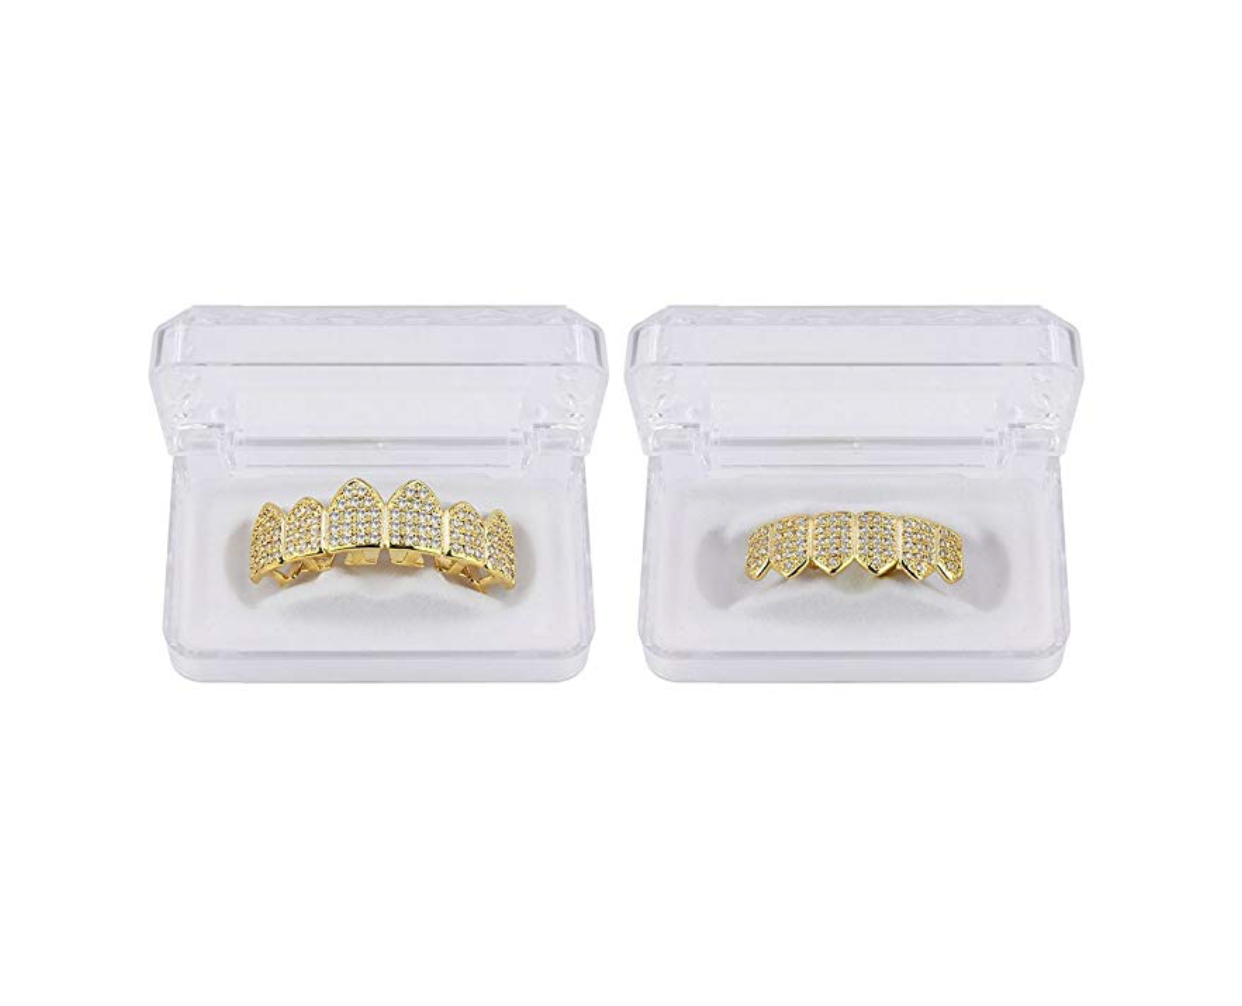 Grillz Gold Color Metal Alloy Simulated-Diamond Grillz Teeth Set Hip Hop Grillz Rapper Jewelry Vampire Fang Diamond Dental Grills Mold Kit